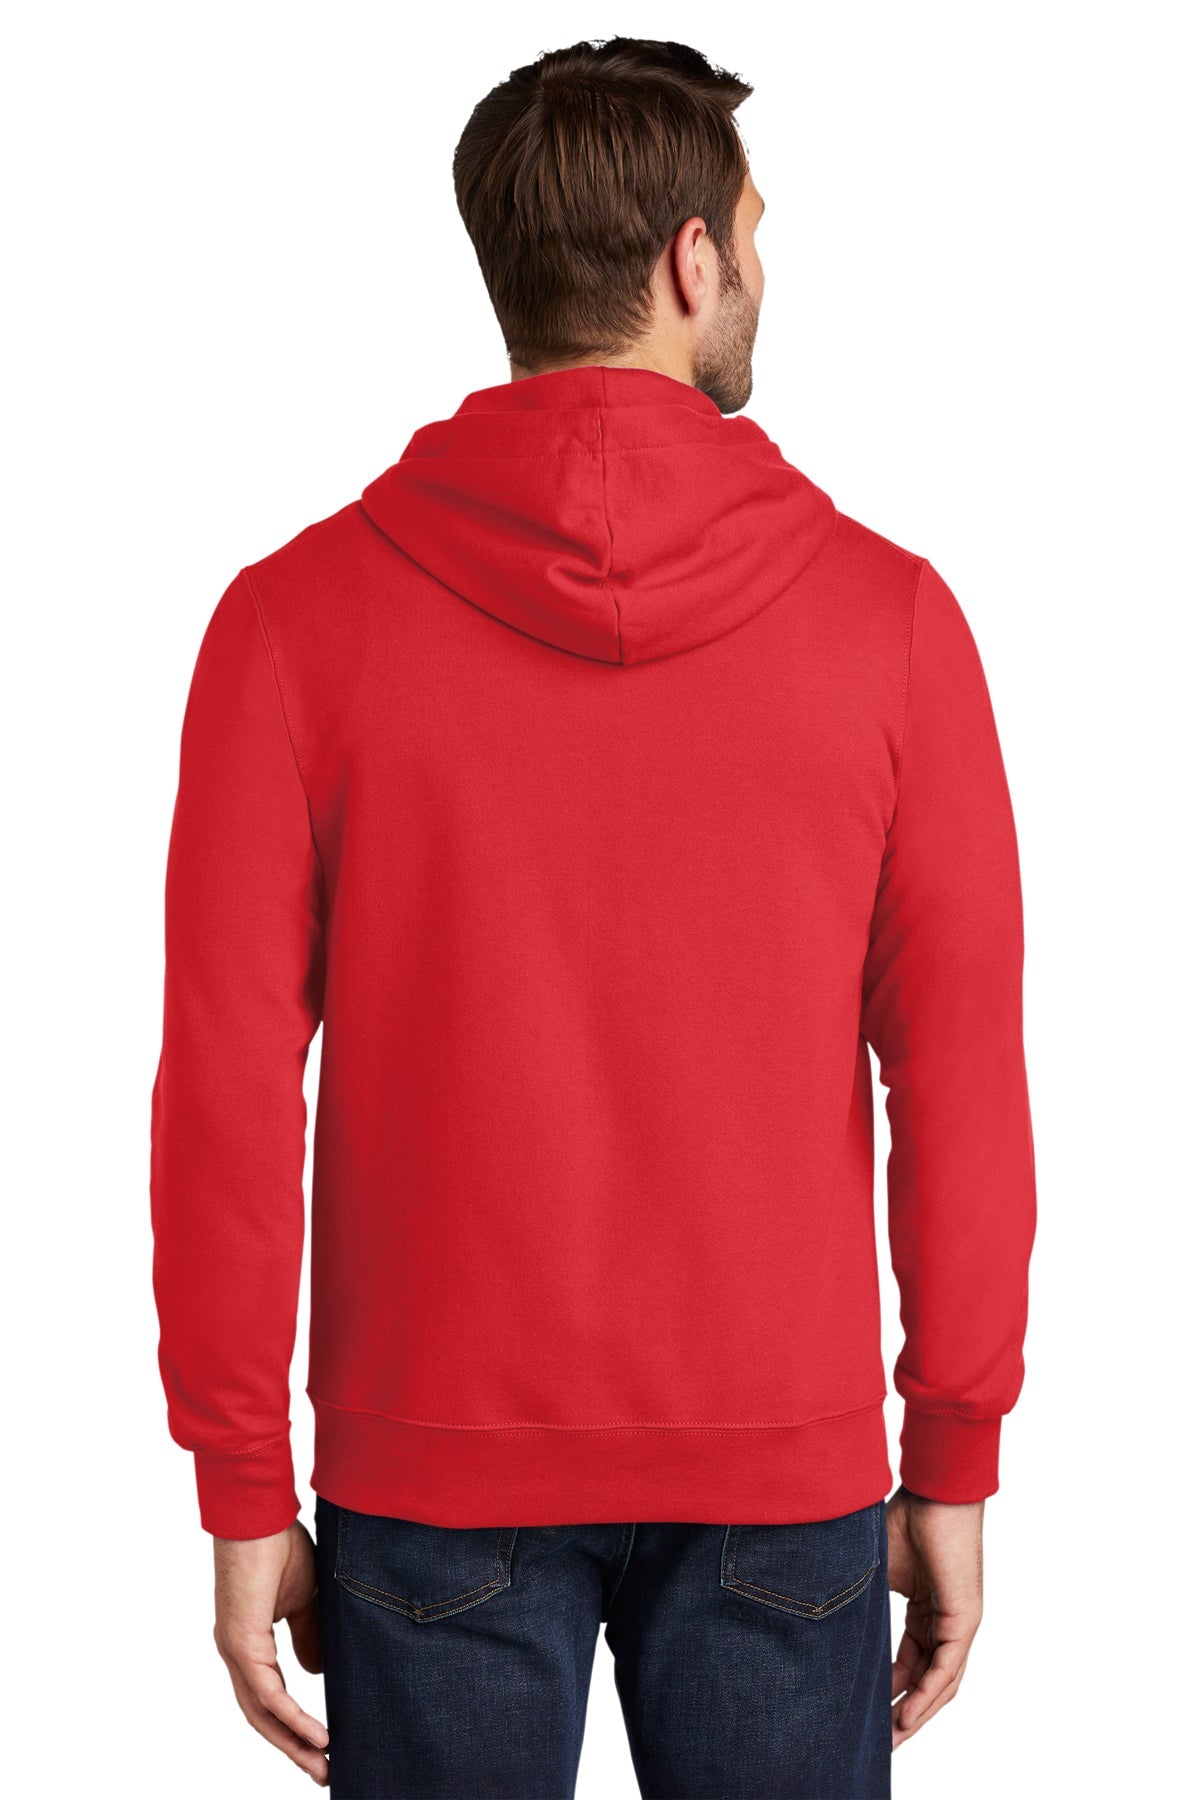 port & company_pc850zh _bright red_company_logo_sweatshirts